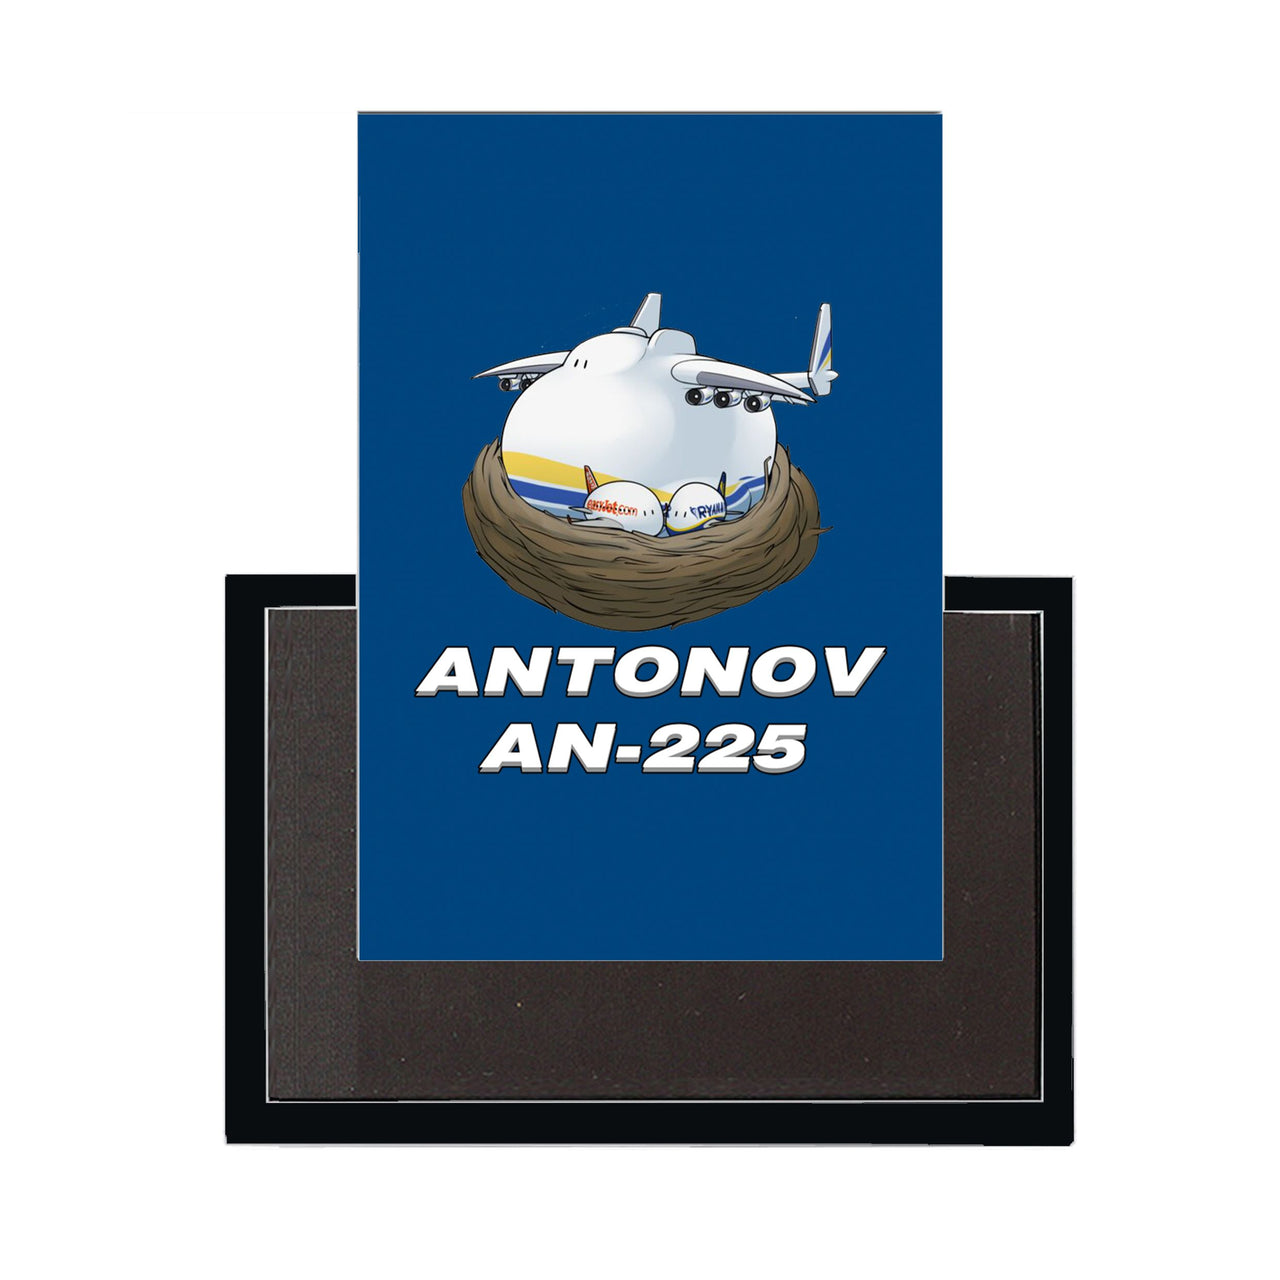 Antonov AN-225 (22) Designed Magnets